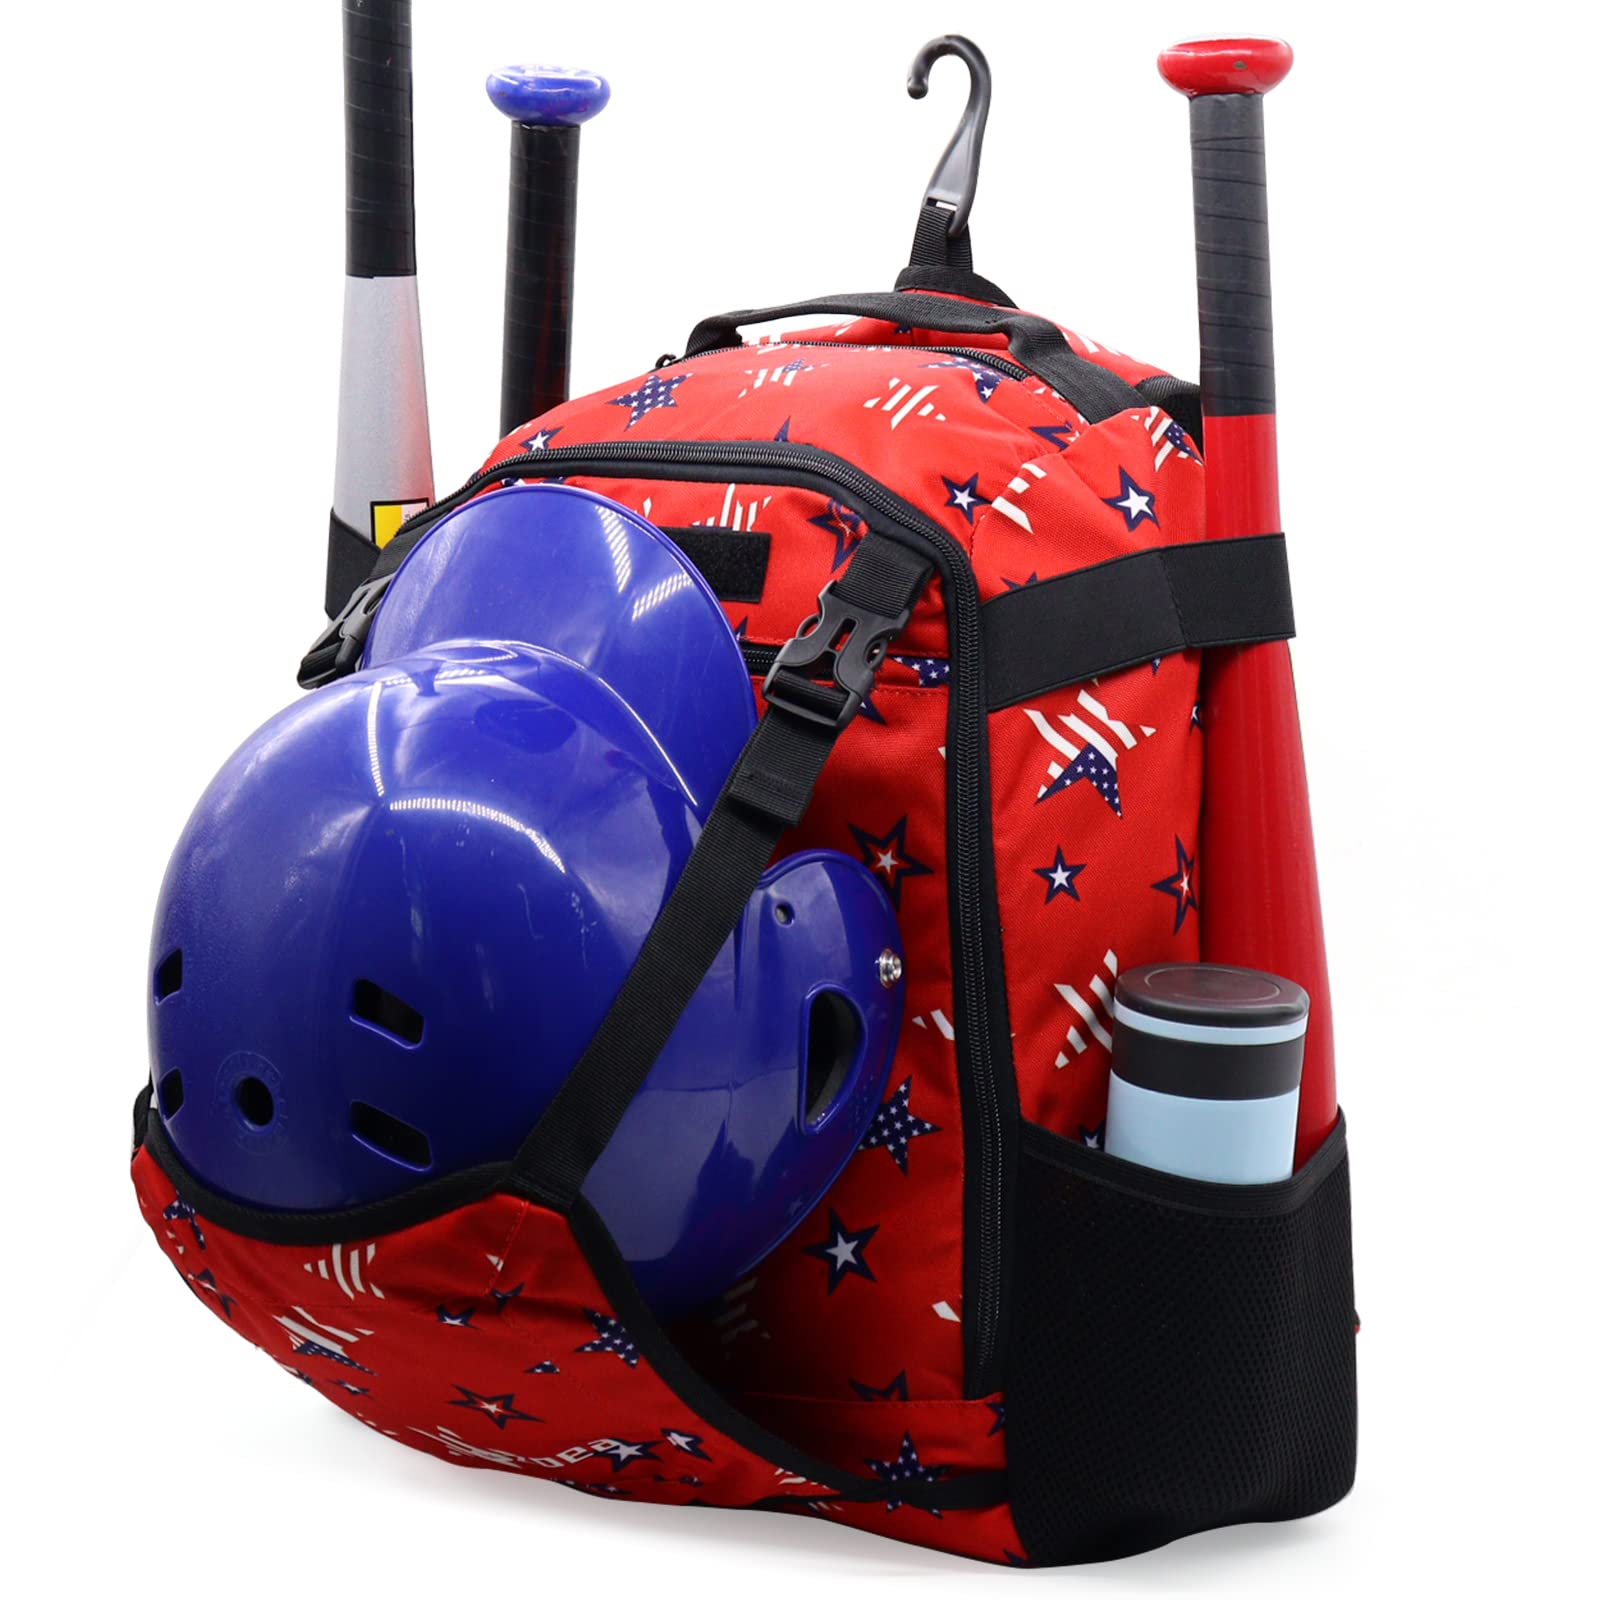 ZOEA Baseball Bat Bag Backpack, T-Ball & Softball Equipment & Gear for Youth, Large Capacity Holds 2 Bats, Helmet, Gloves, Cleat